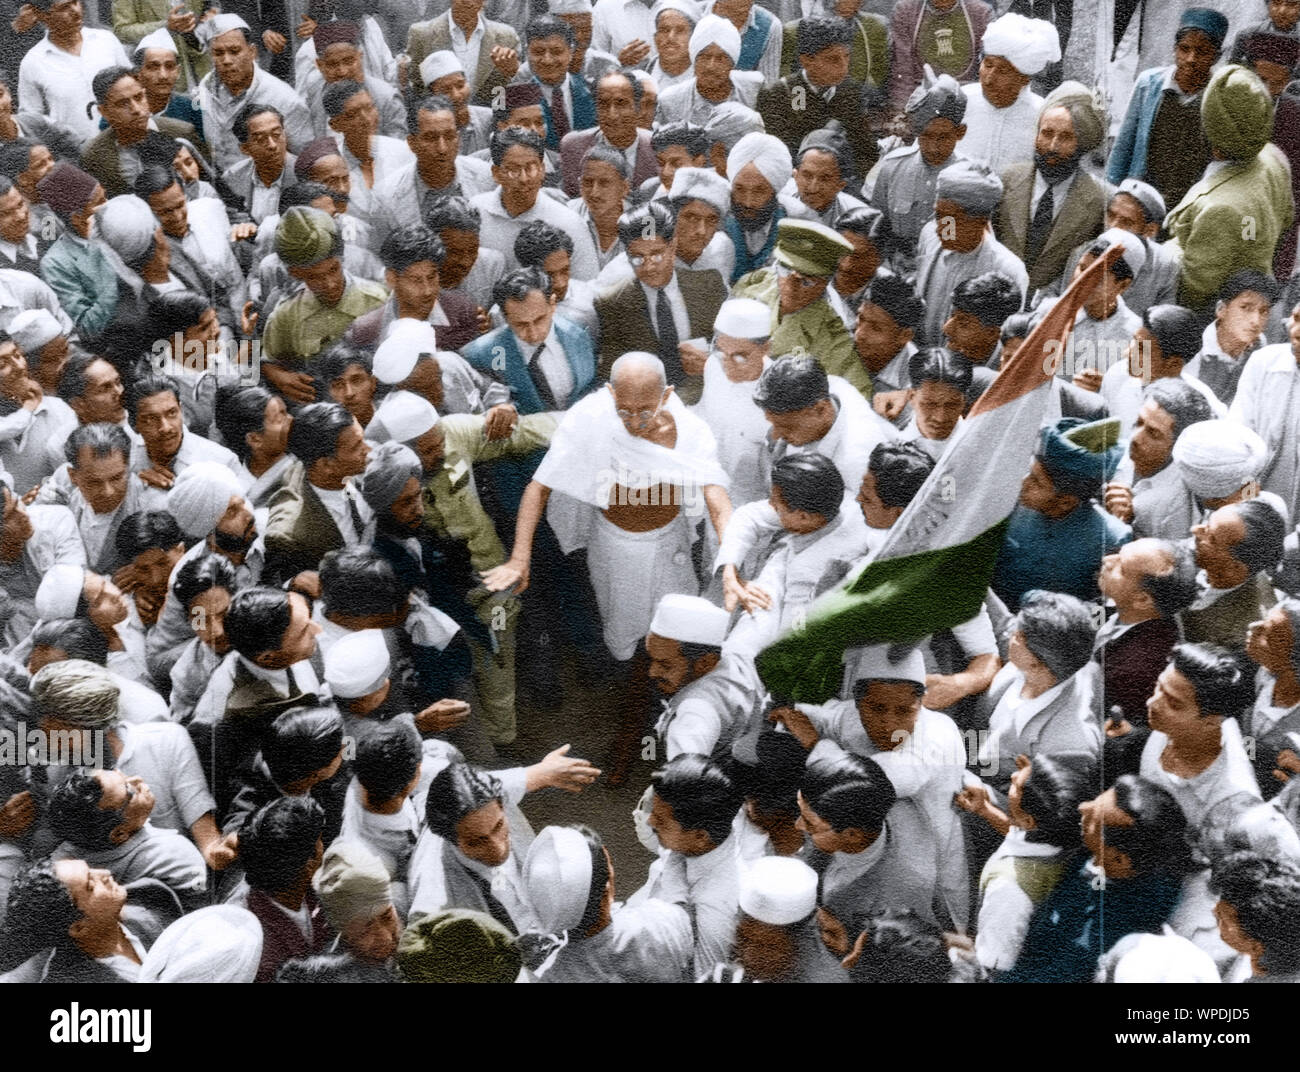 Mahatma Gandhi after meeting British Viceroy, Shimla, Himachal Pradesh, India, Asia, June 24, 1945 Stock Photo